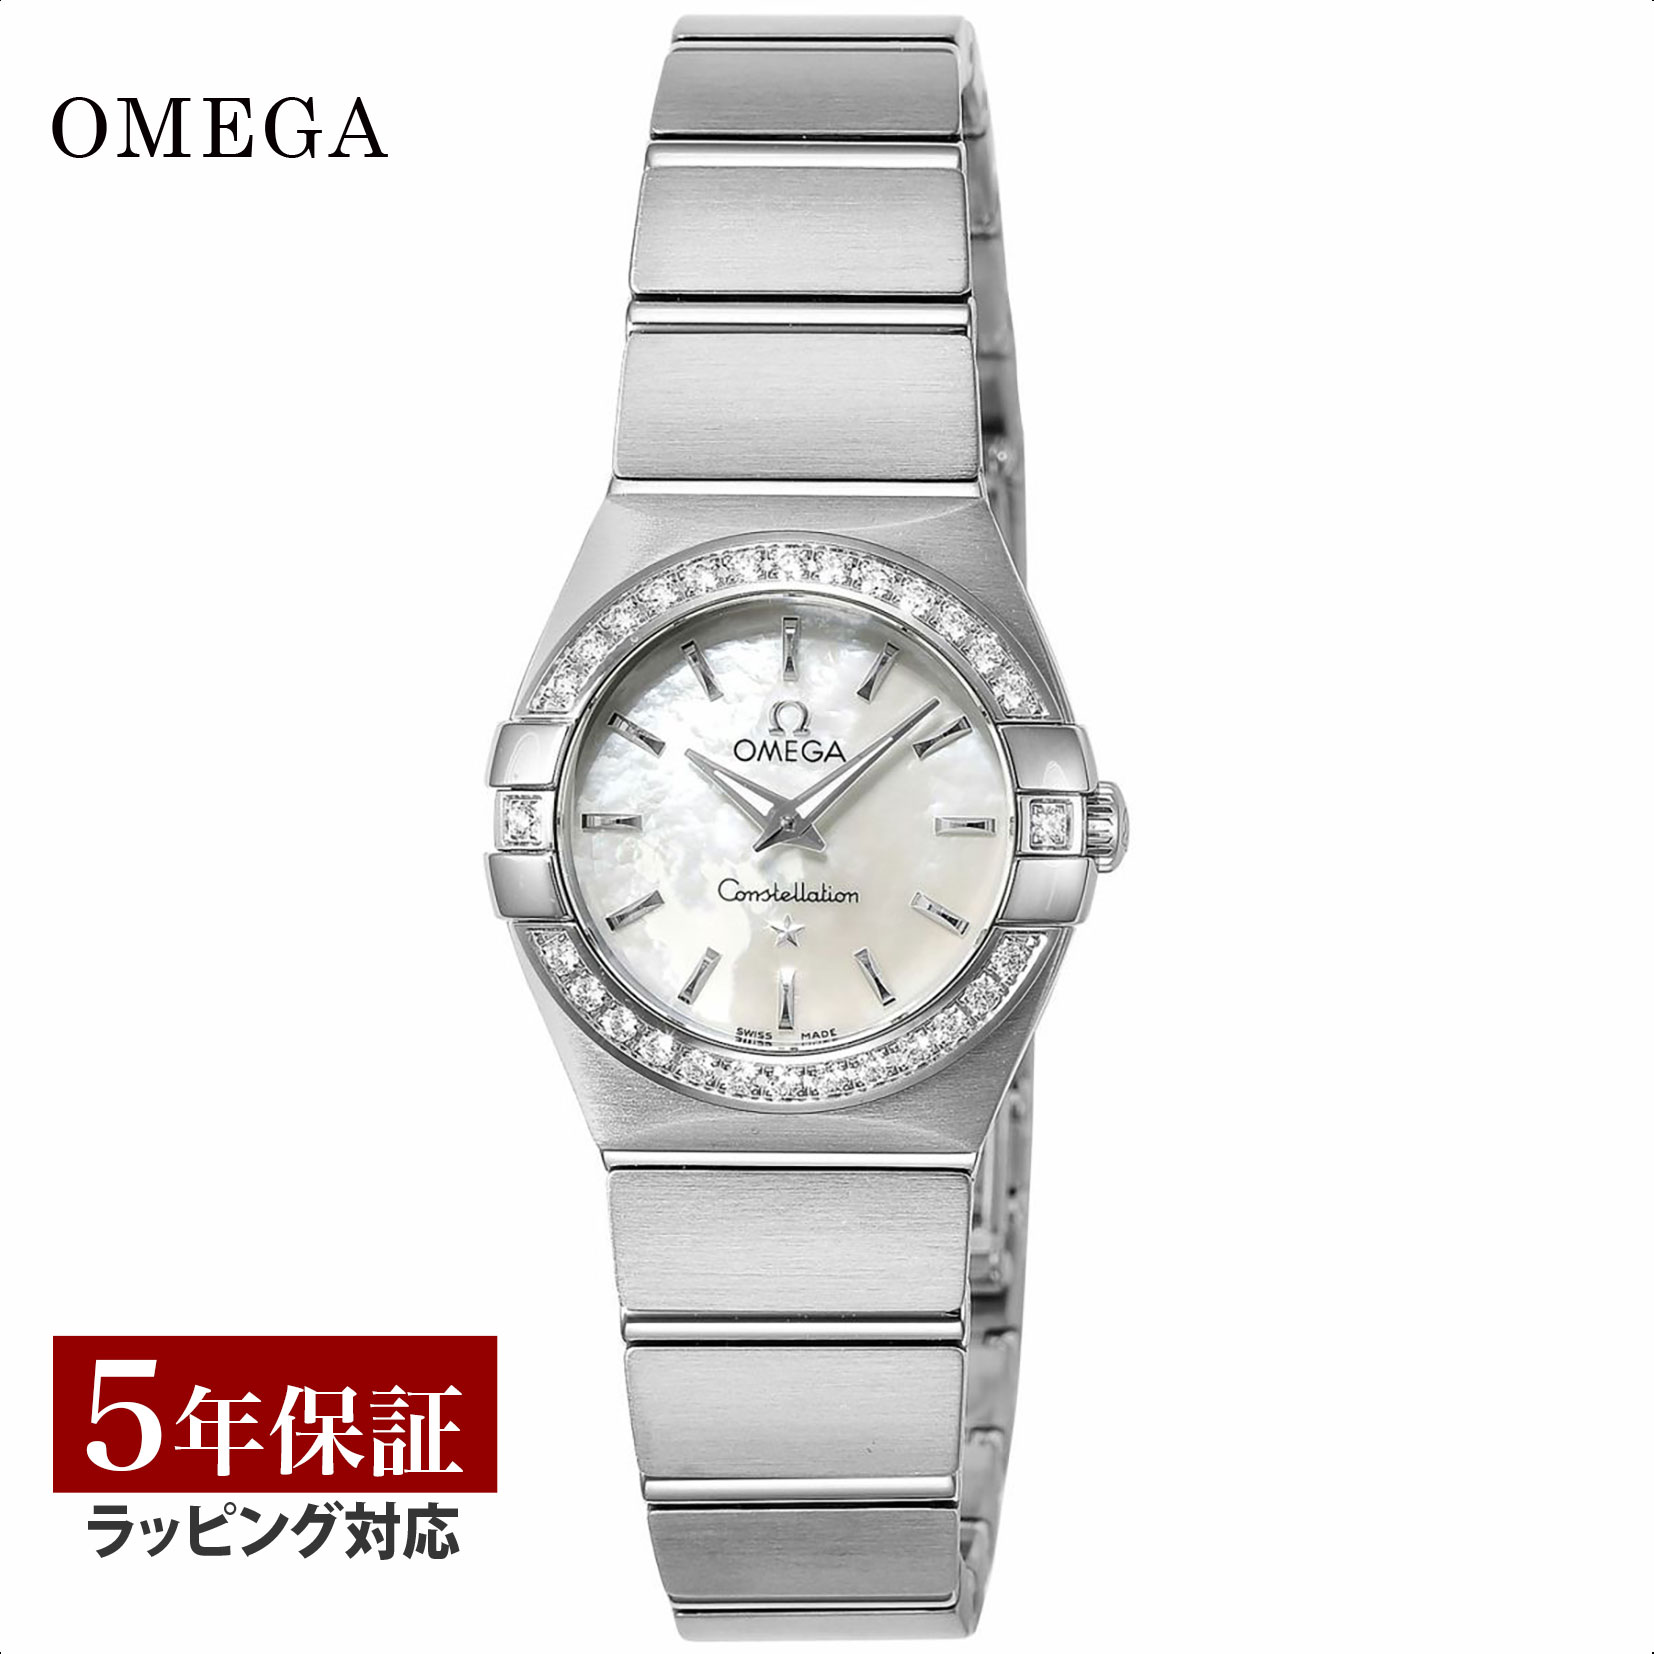 OMEGA オメガ コンステレーション クォーツ レディース ホワイトパール 123.15.24.60.05.001 時計 腕時計 高級腕時計 ブランド